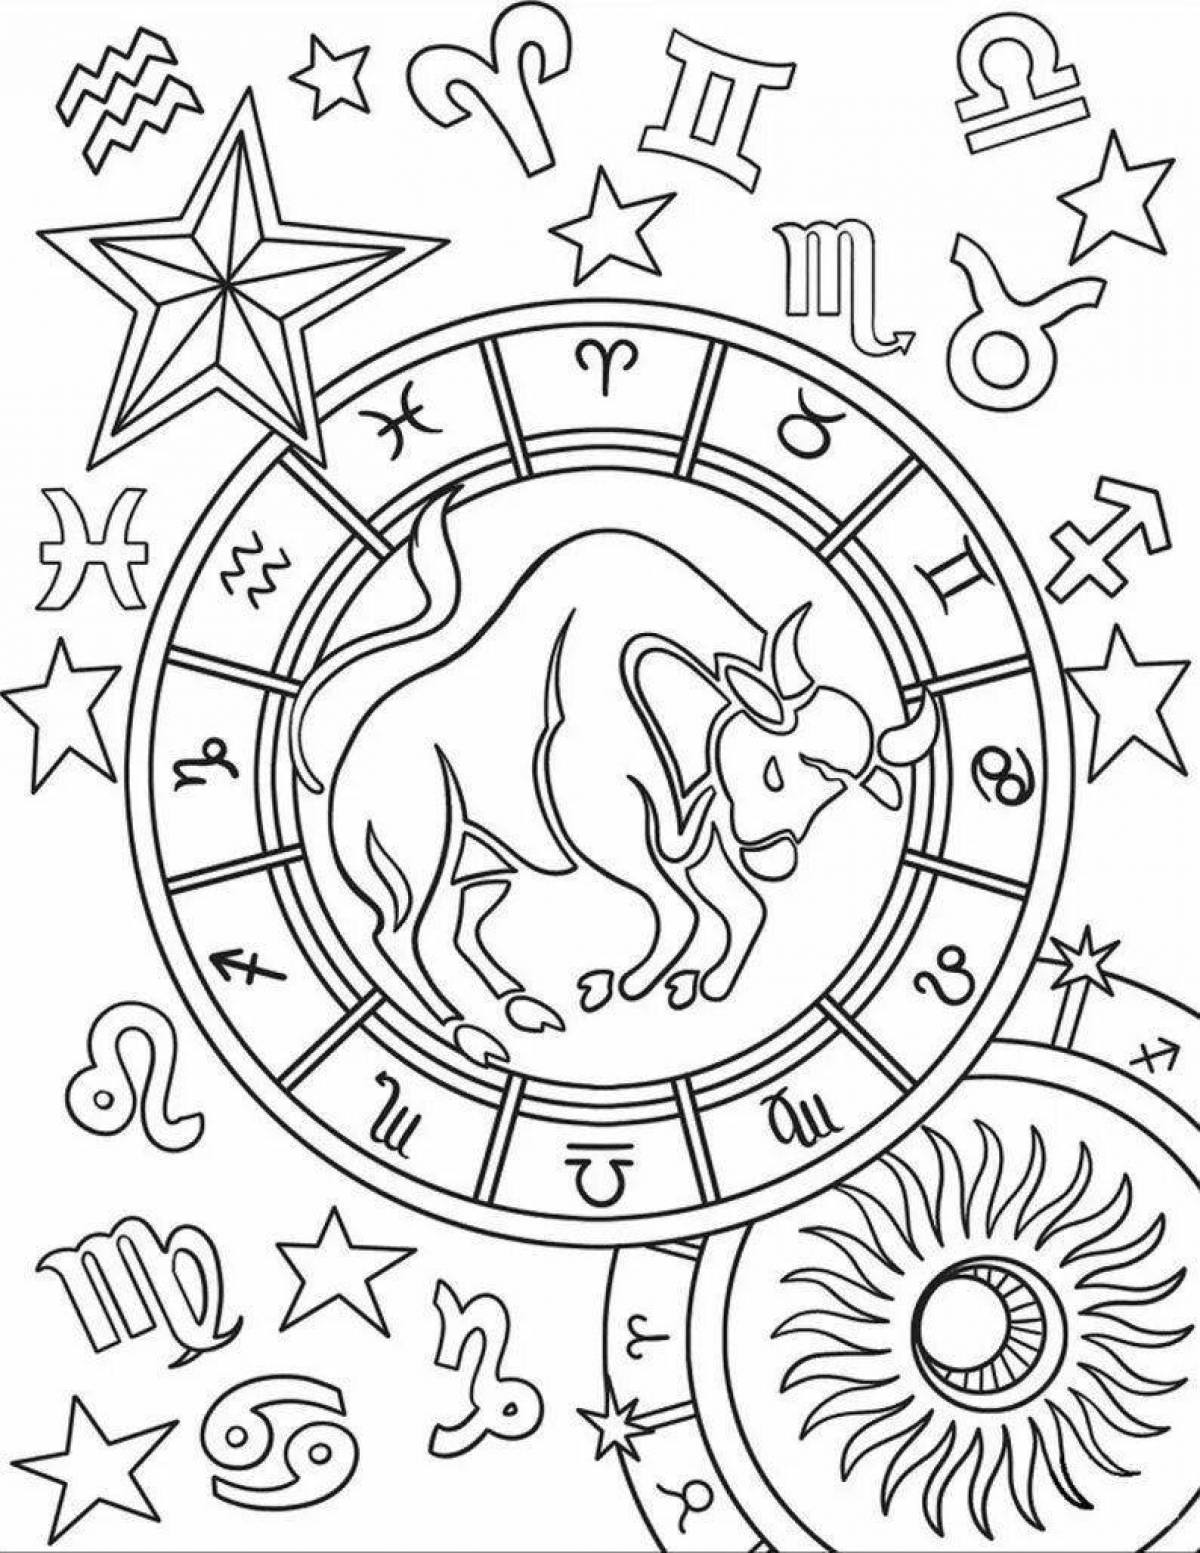 Coloring book cheerful zodiac